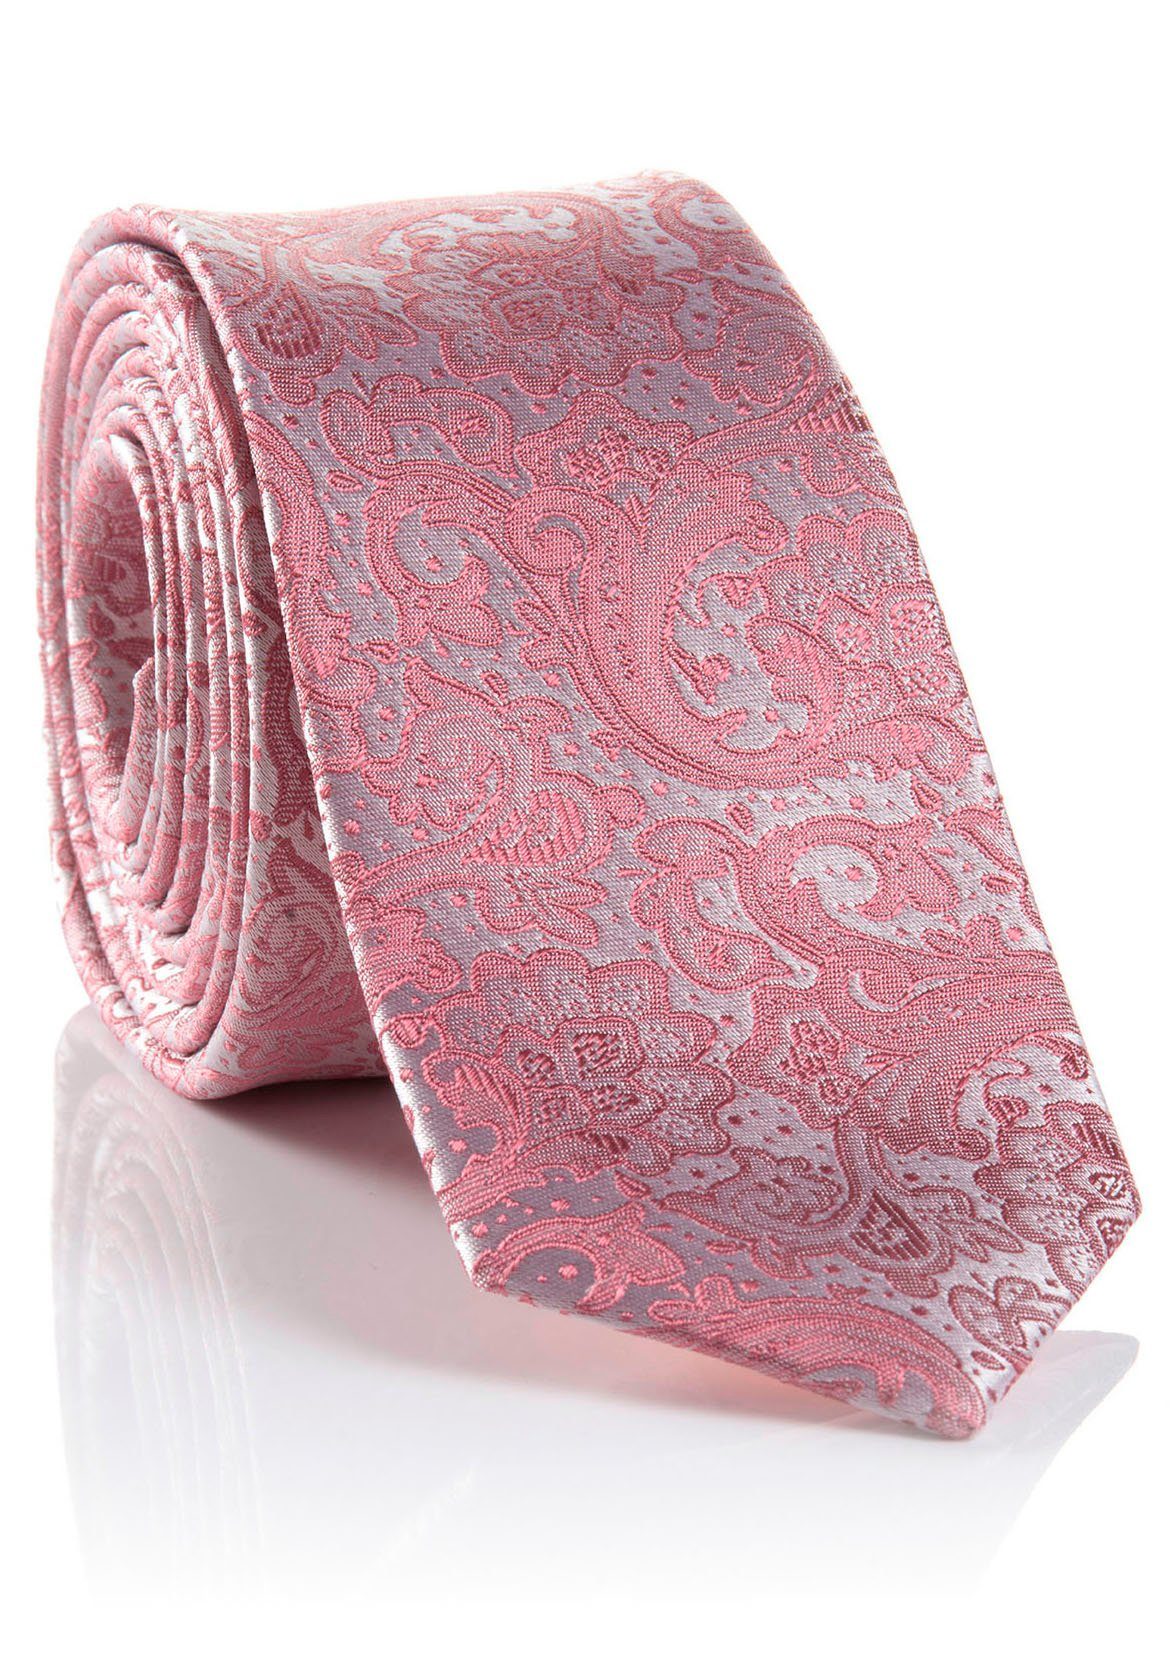 MONTI Krawatte LELIO Krawatte aus reiner Seide, Paisley-Muster bright red